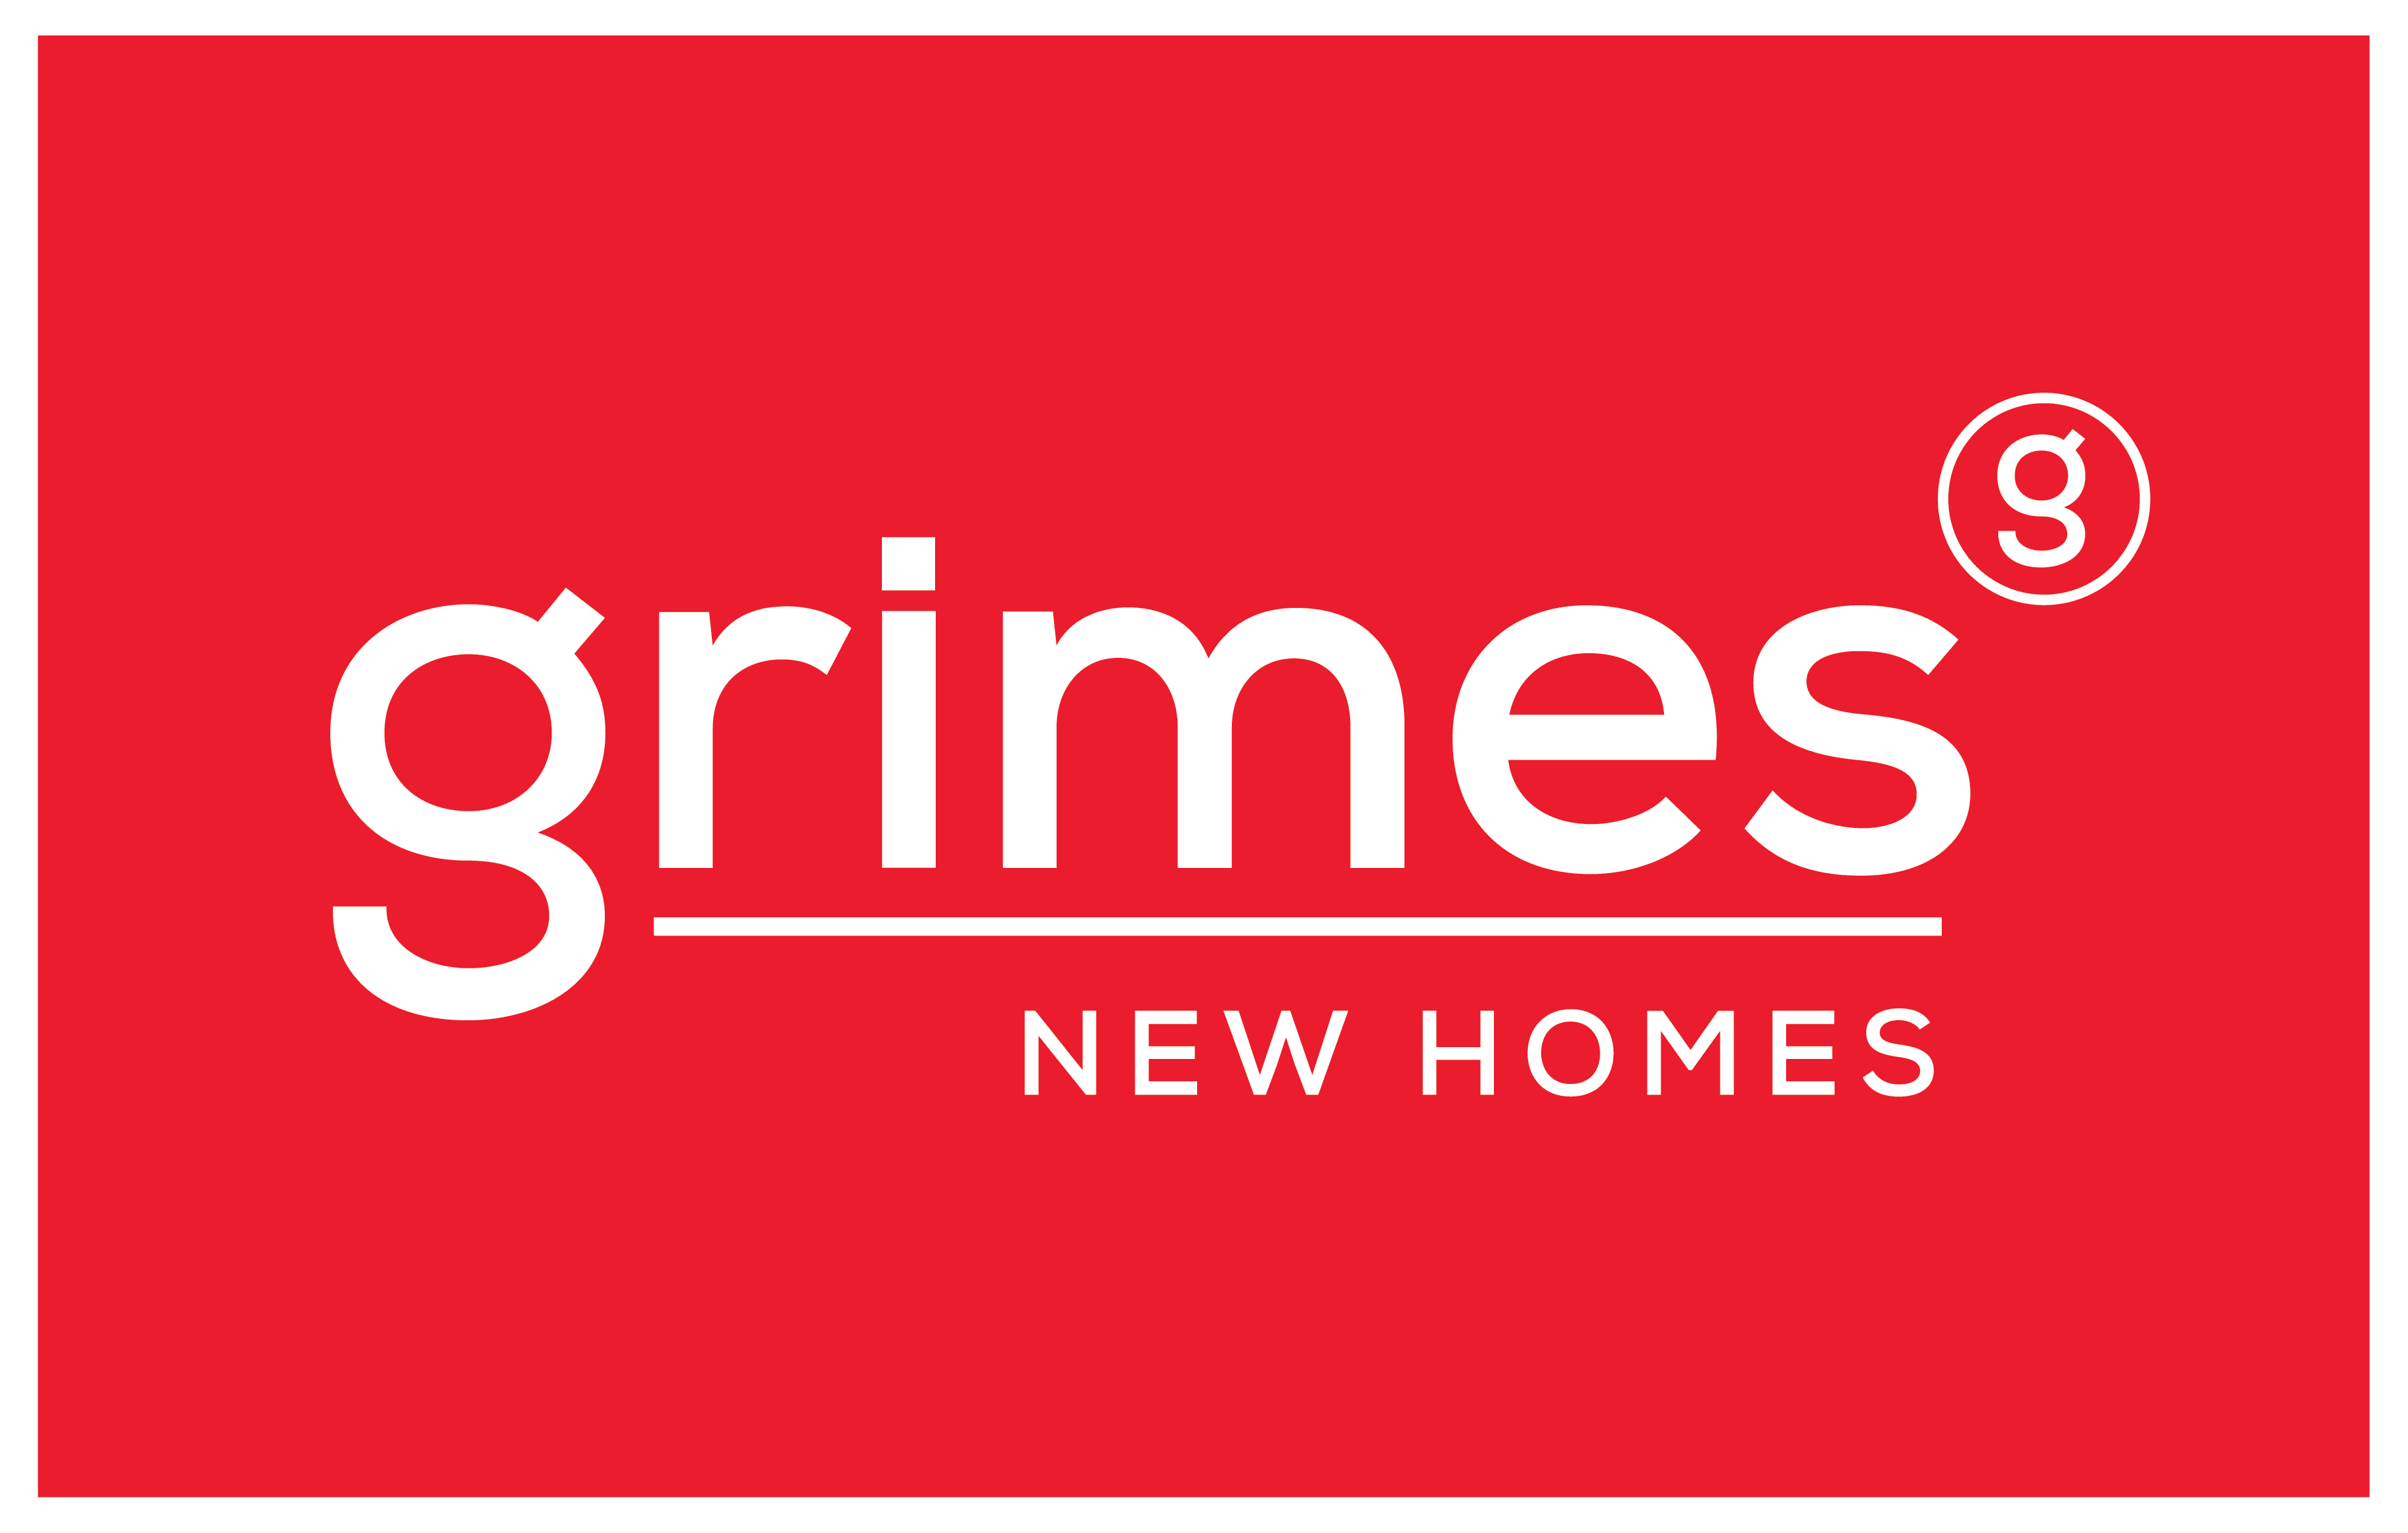 REA Grimes Logo